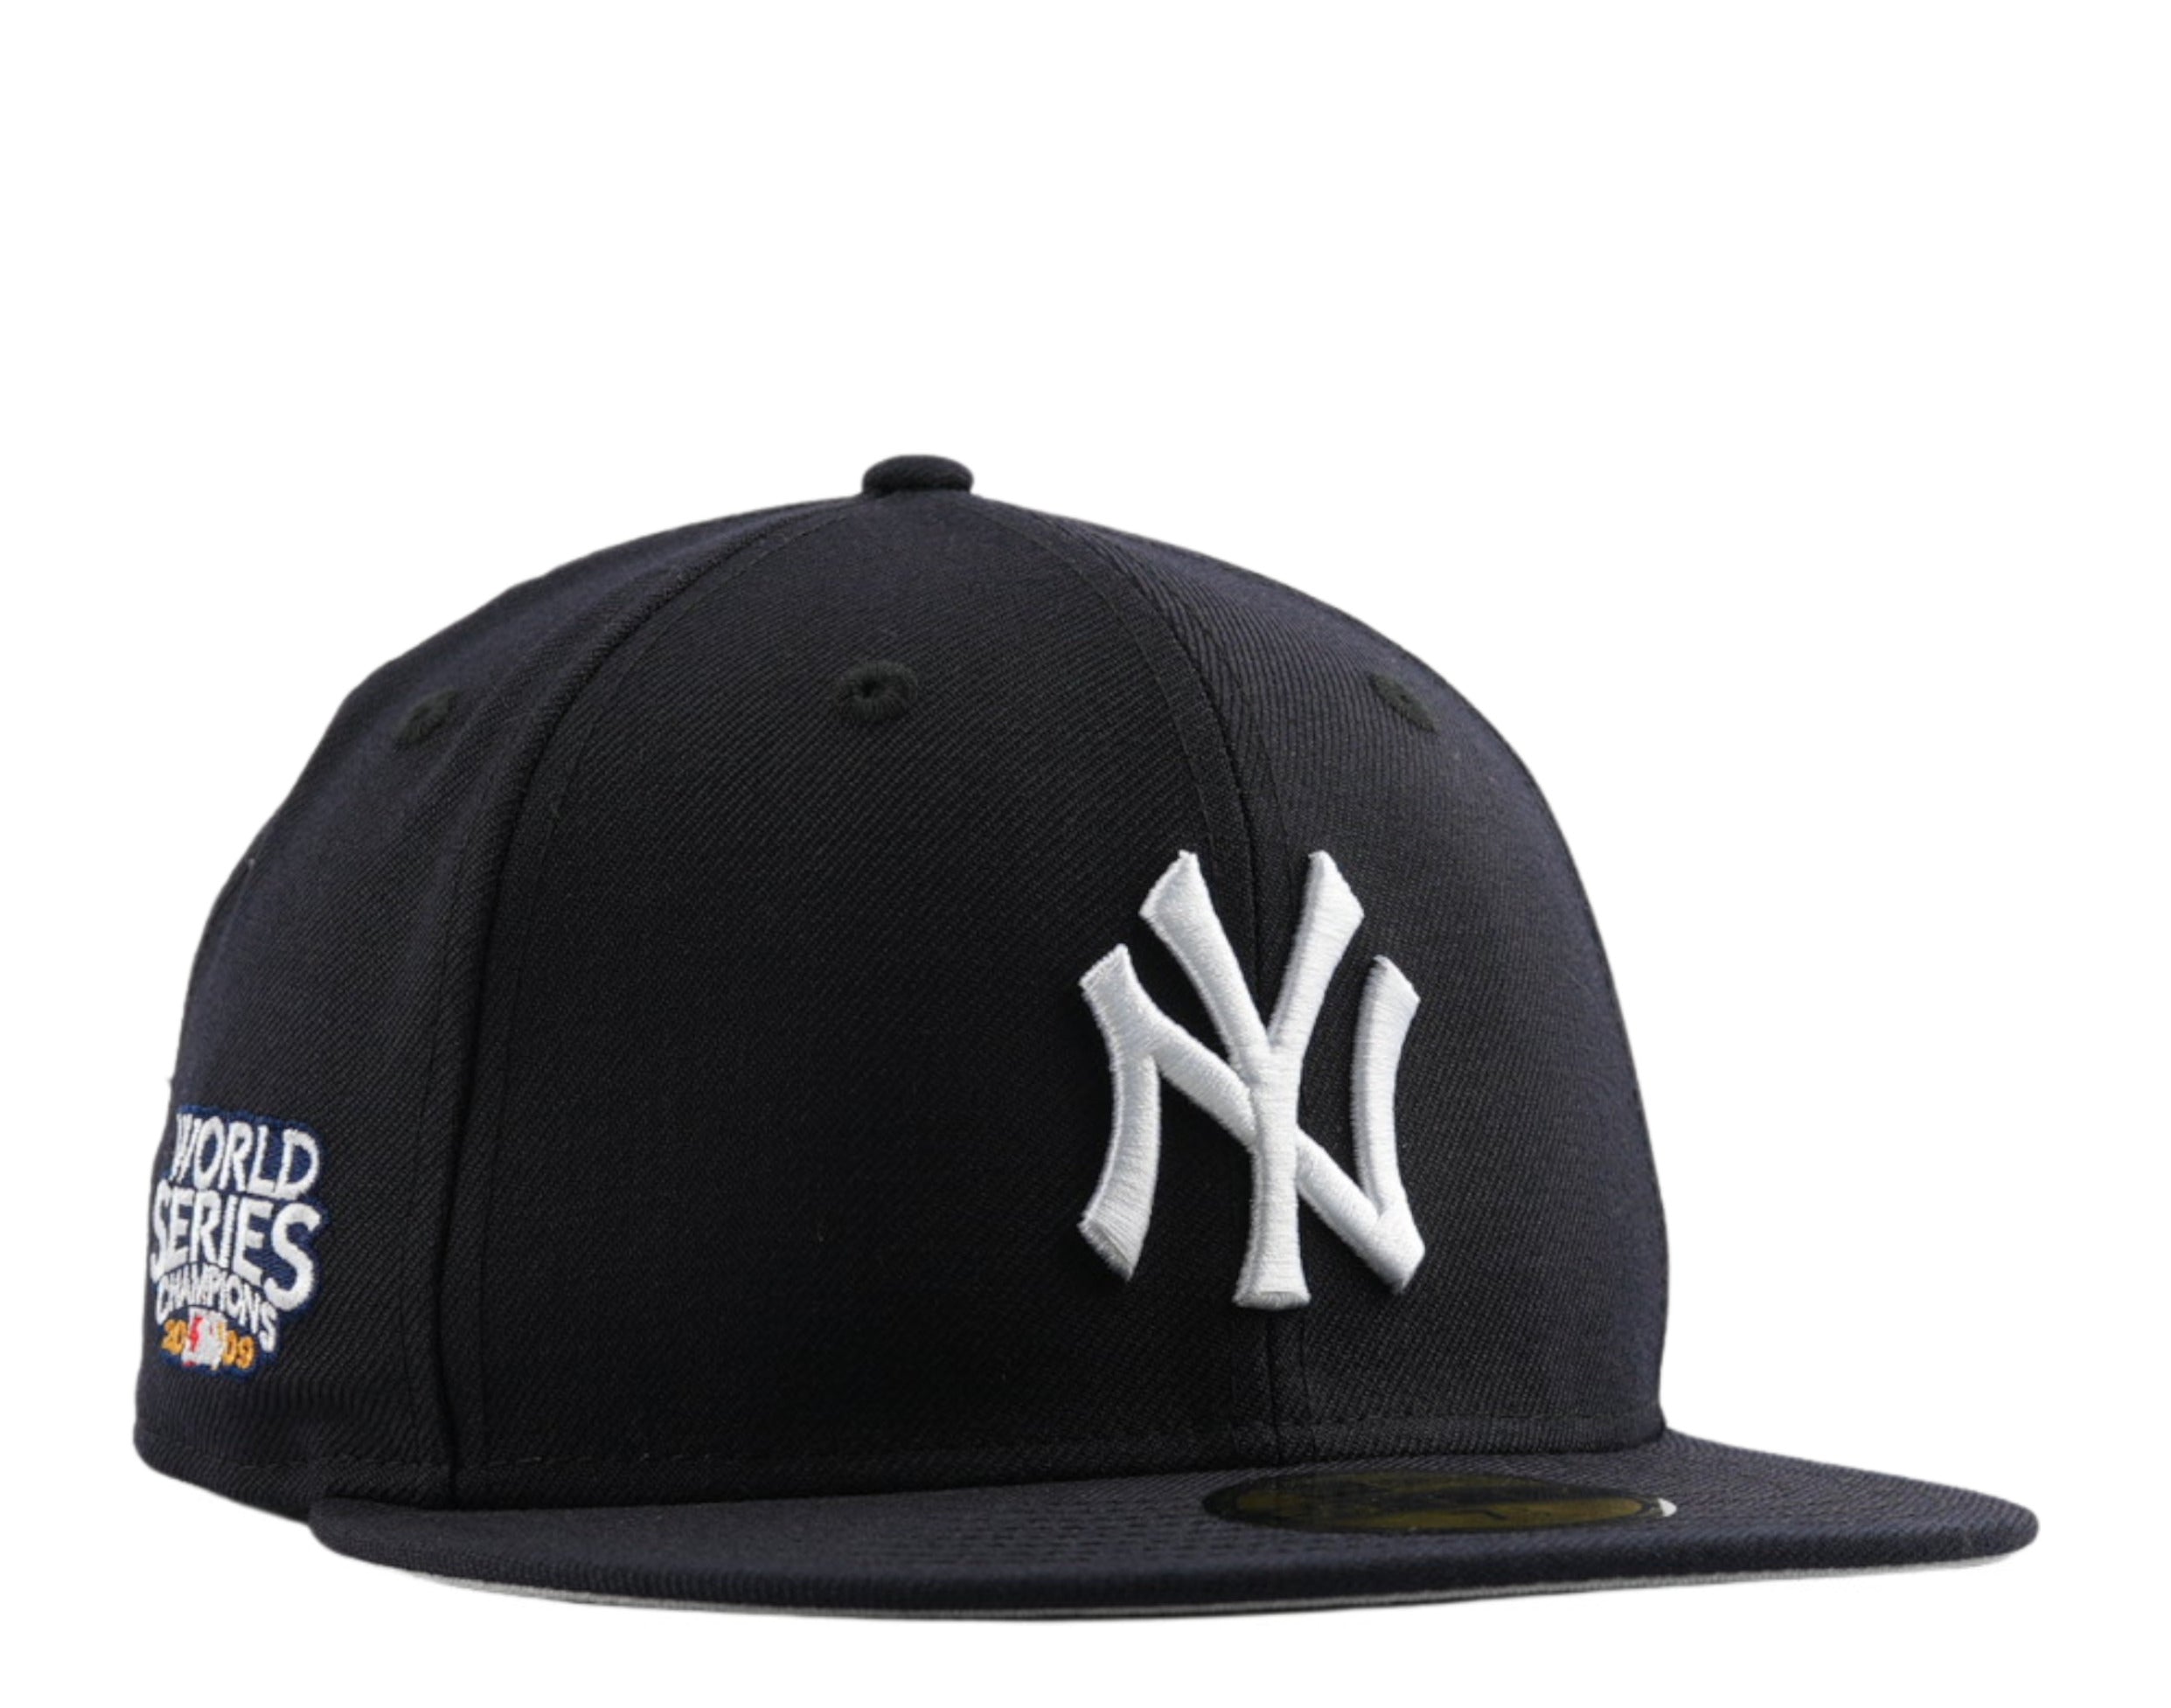 2009 World Series Patch - New York Yankees